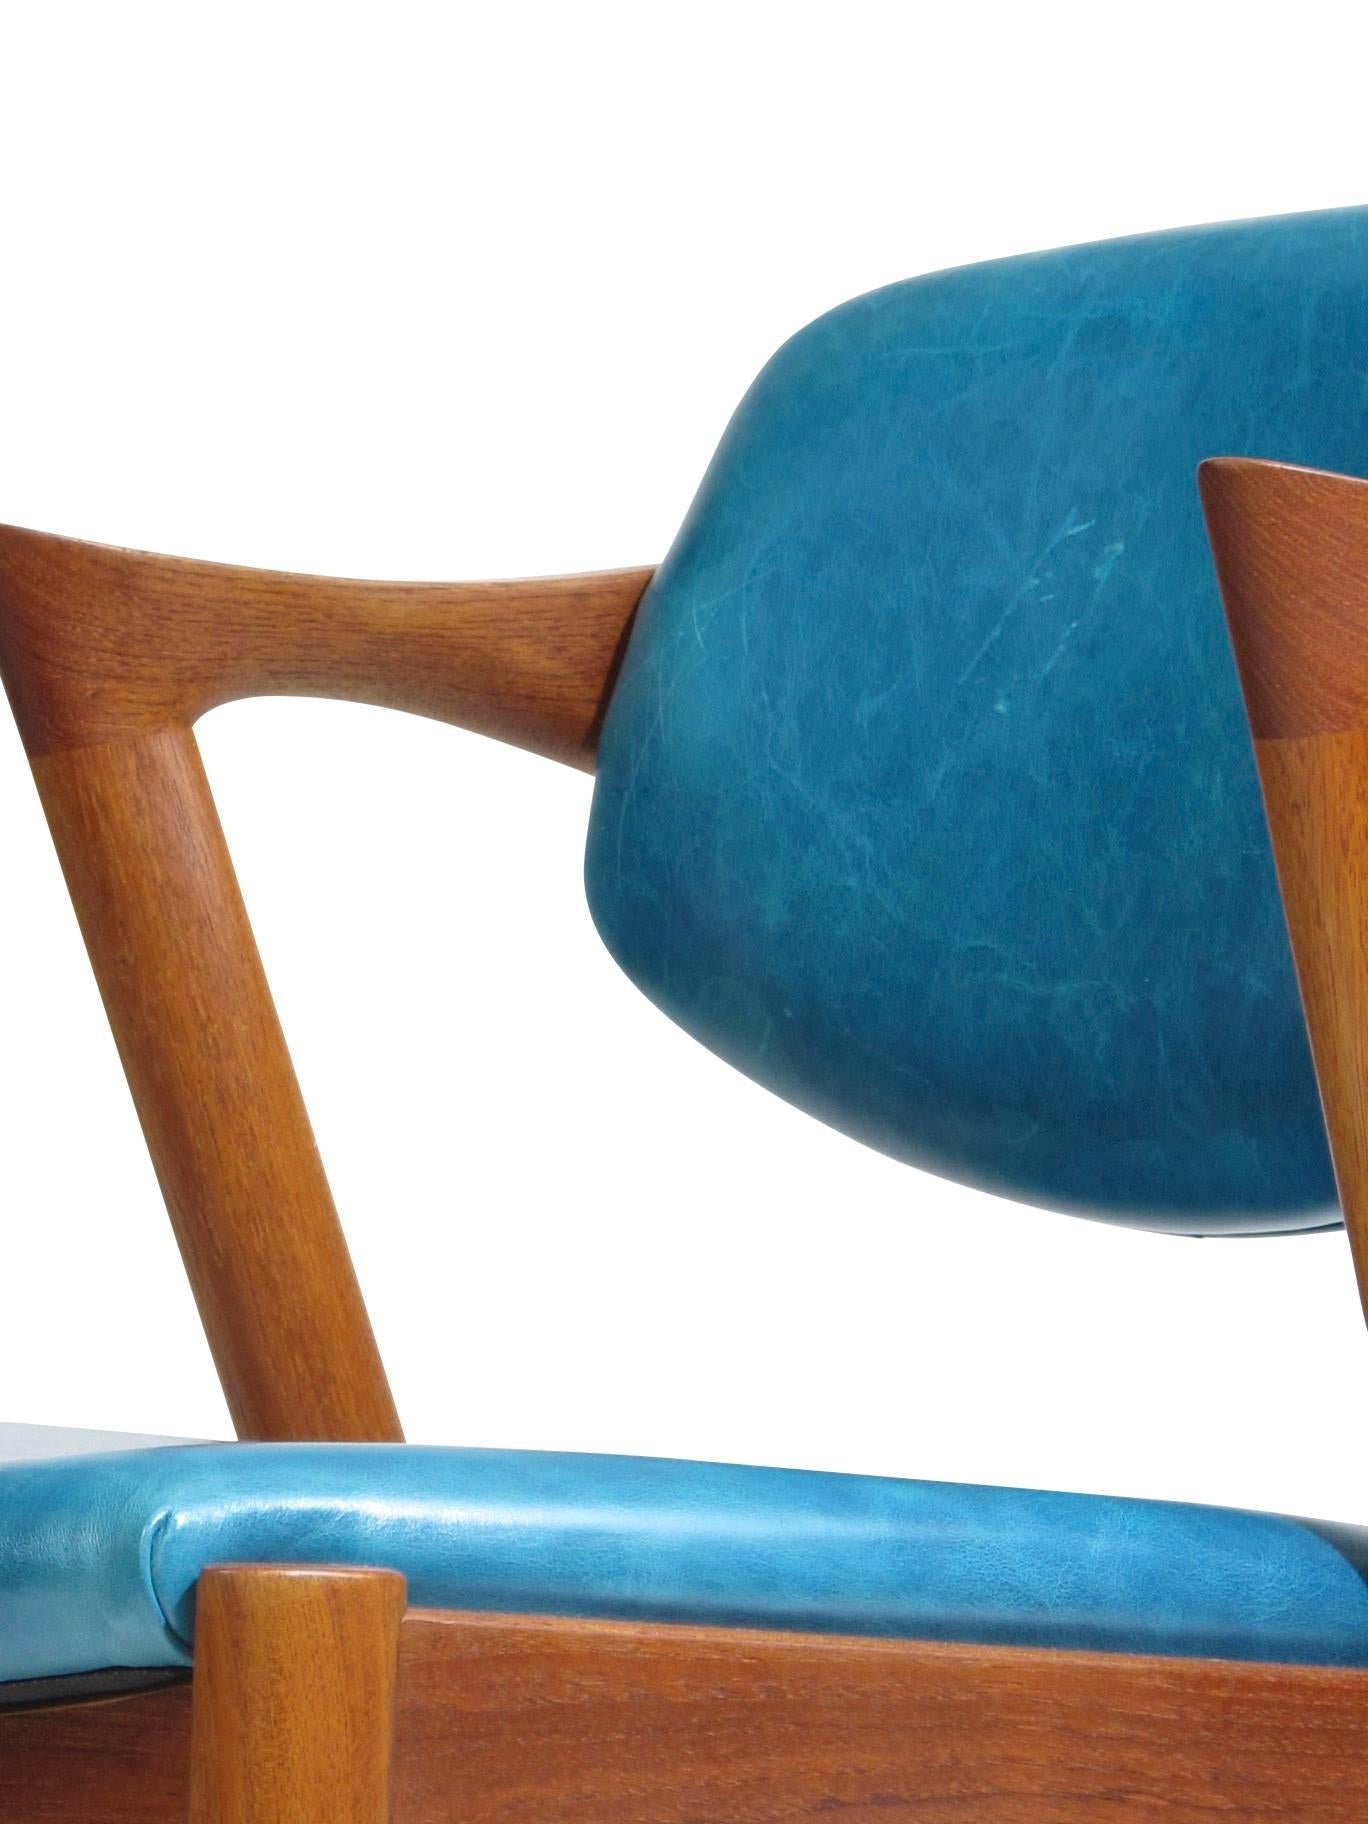 20th Century Six Kai Kristiansen Teak Danish Dining Chairs in Turquoise Leather, 20 Available